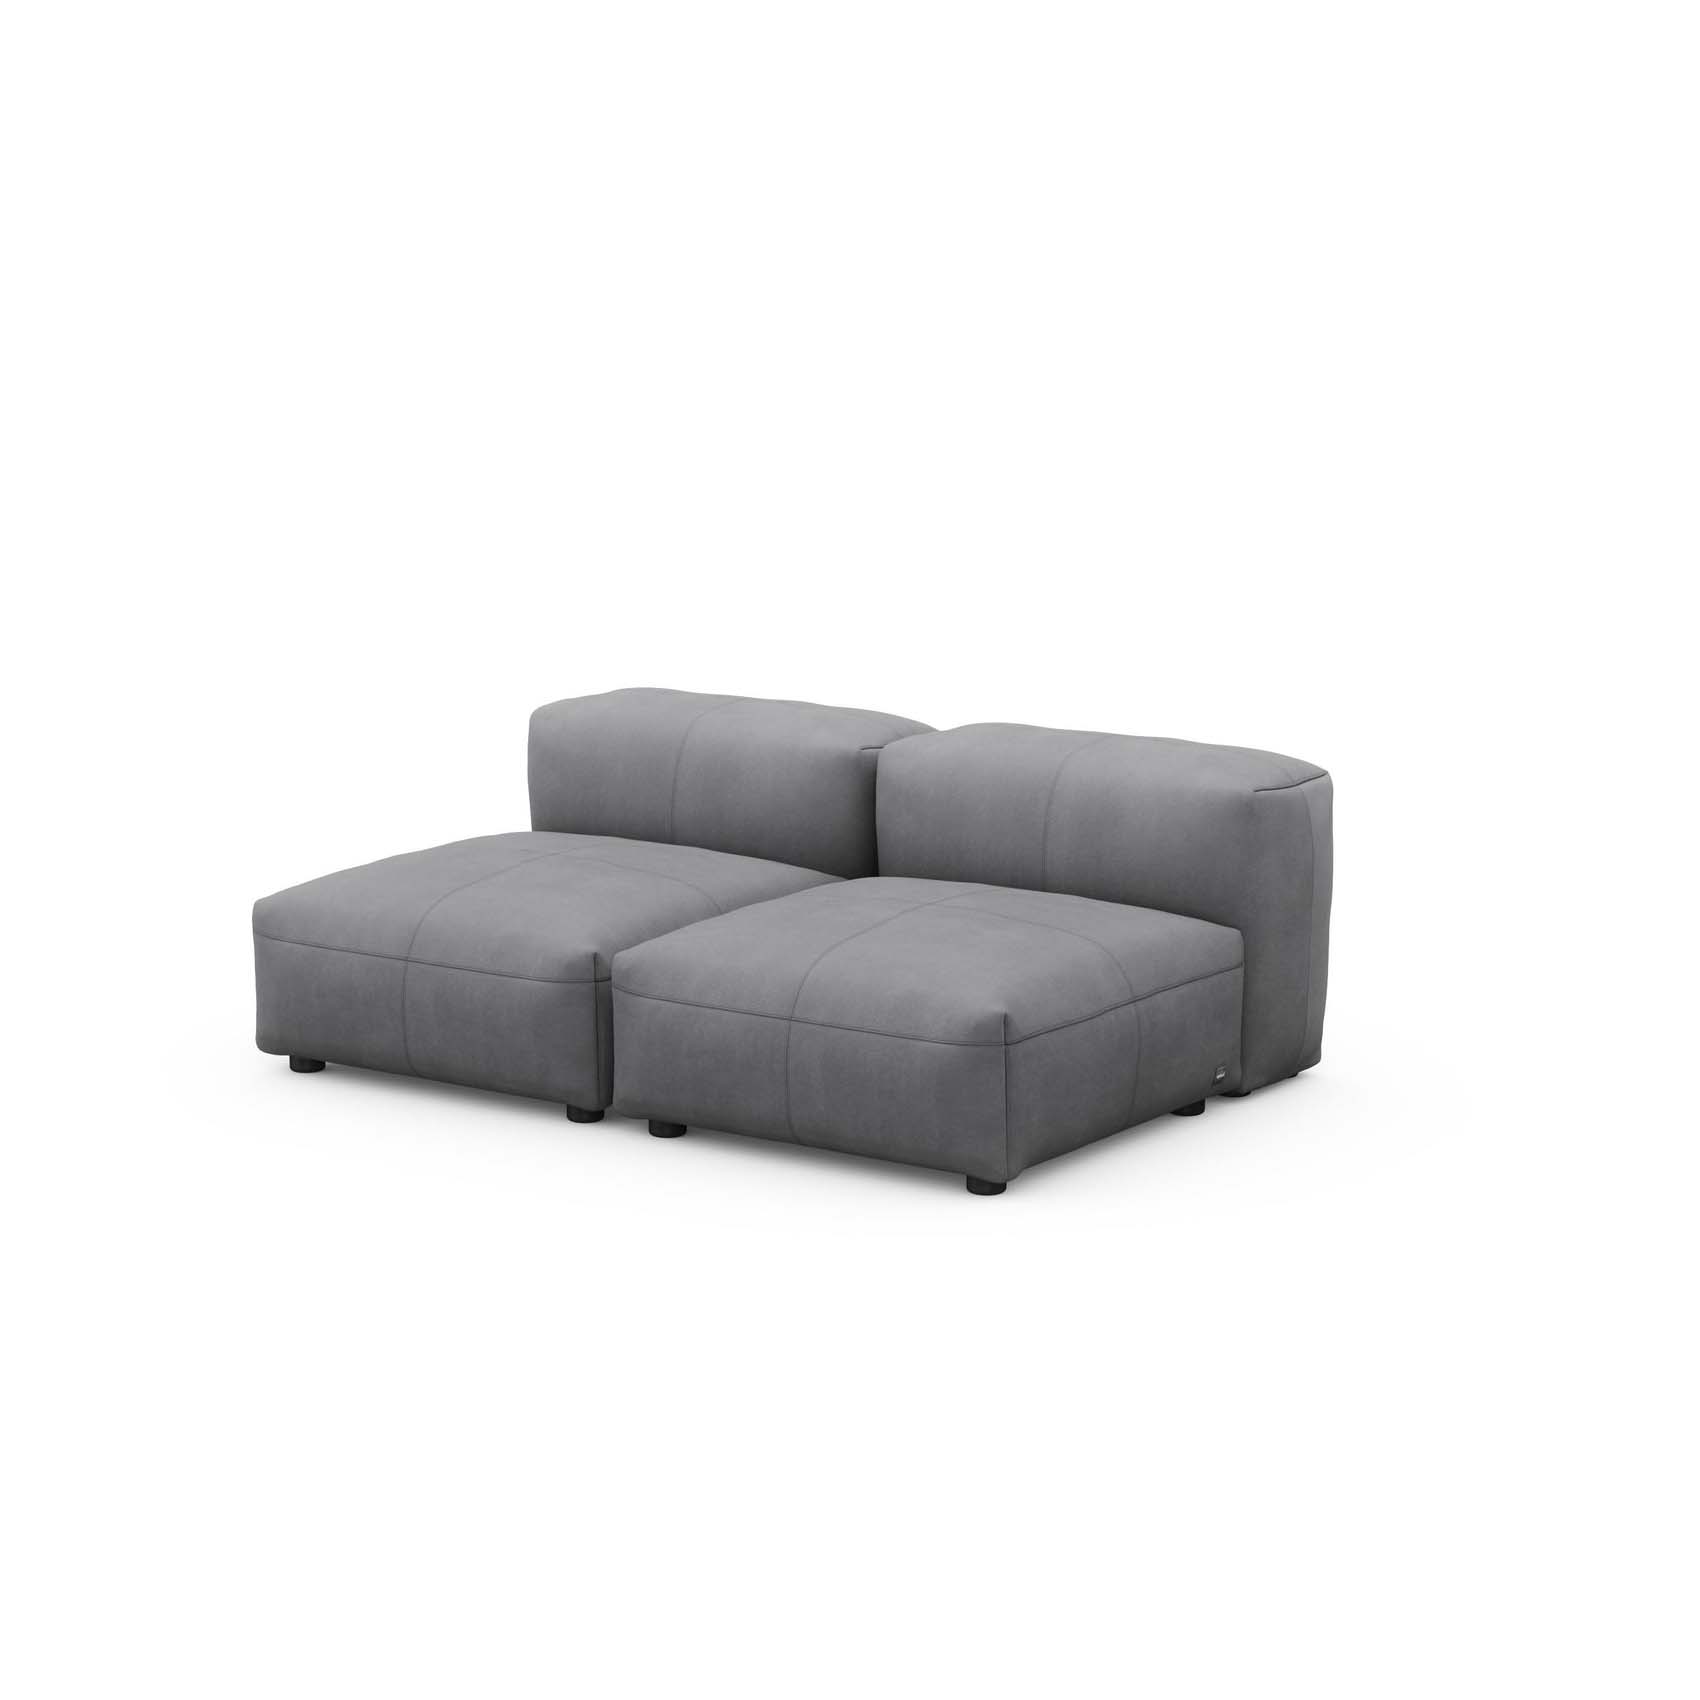 Two Seat Lounge Sofa S Leather Dark Grey